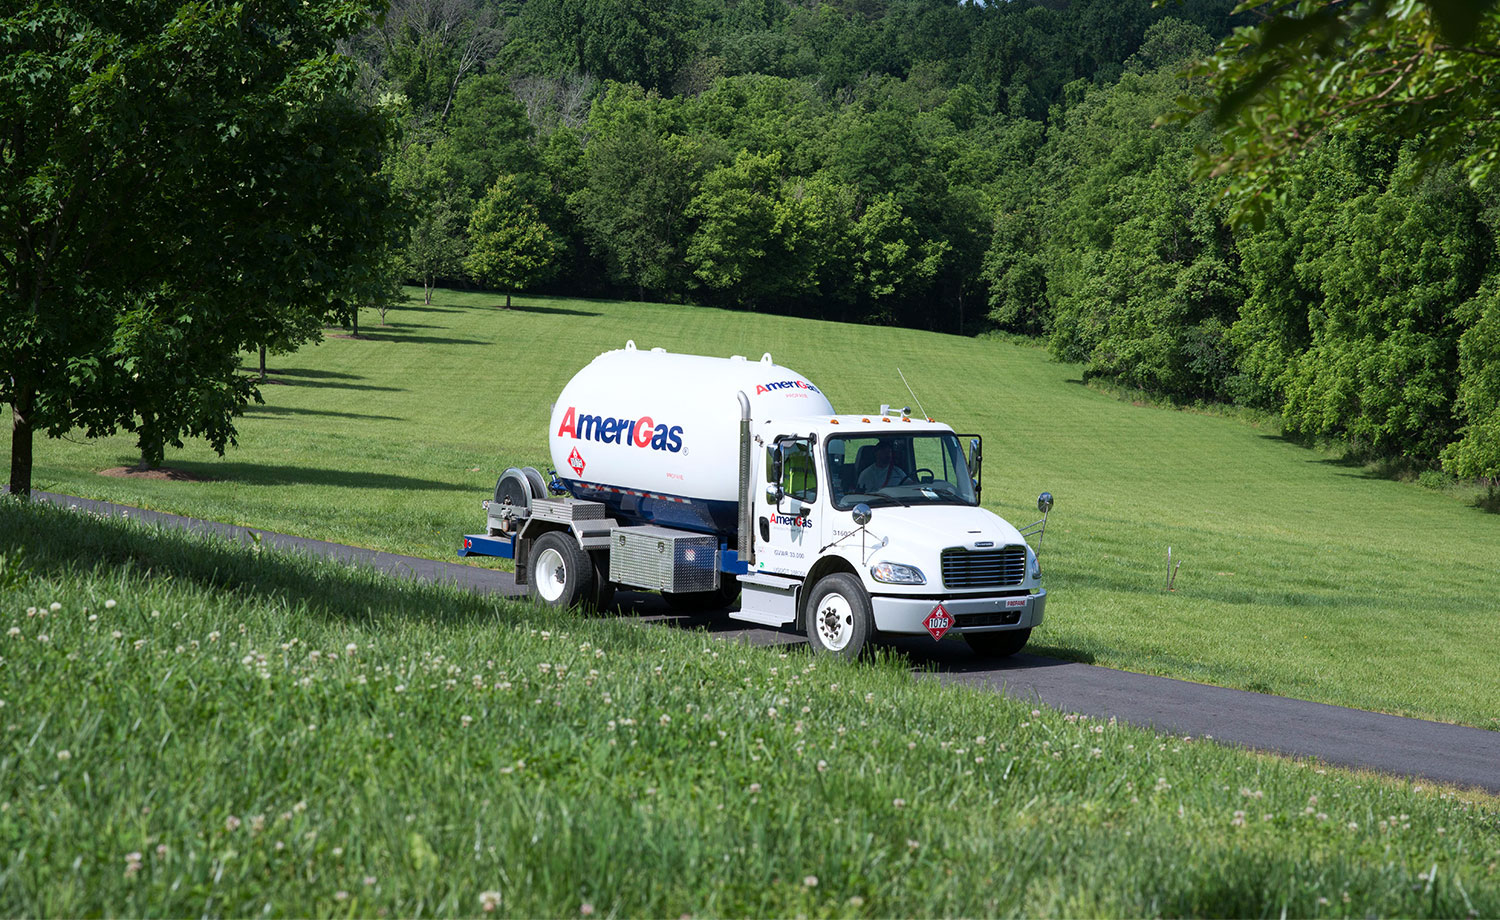 AmeriGas tanker truck on a lush rural road.